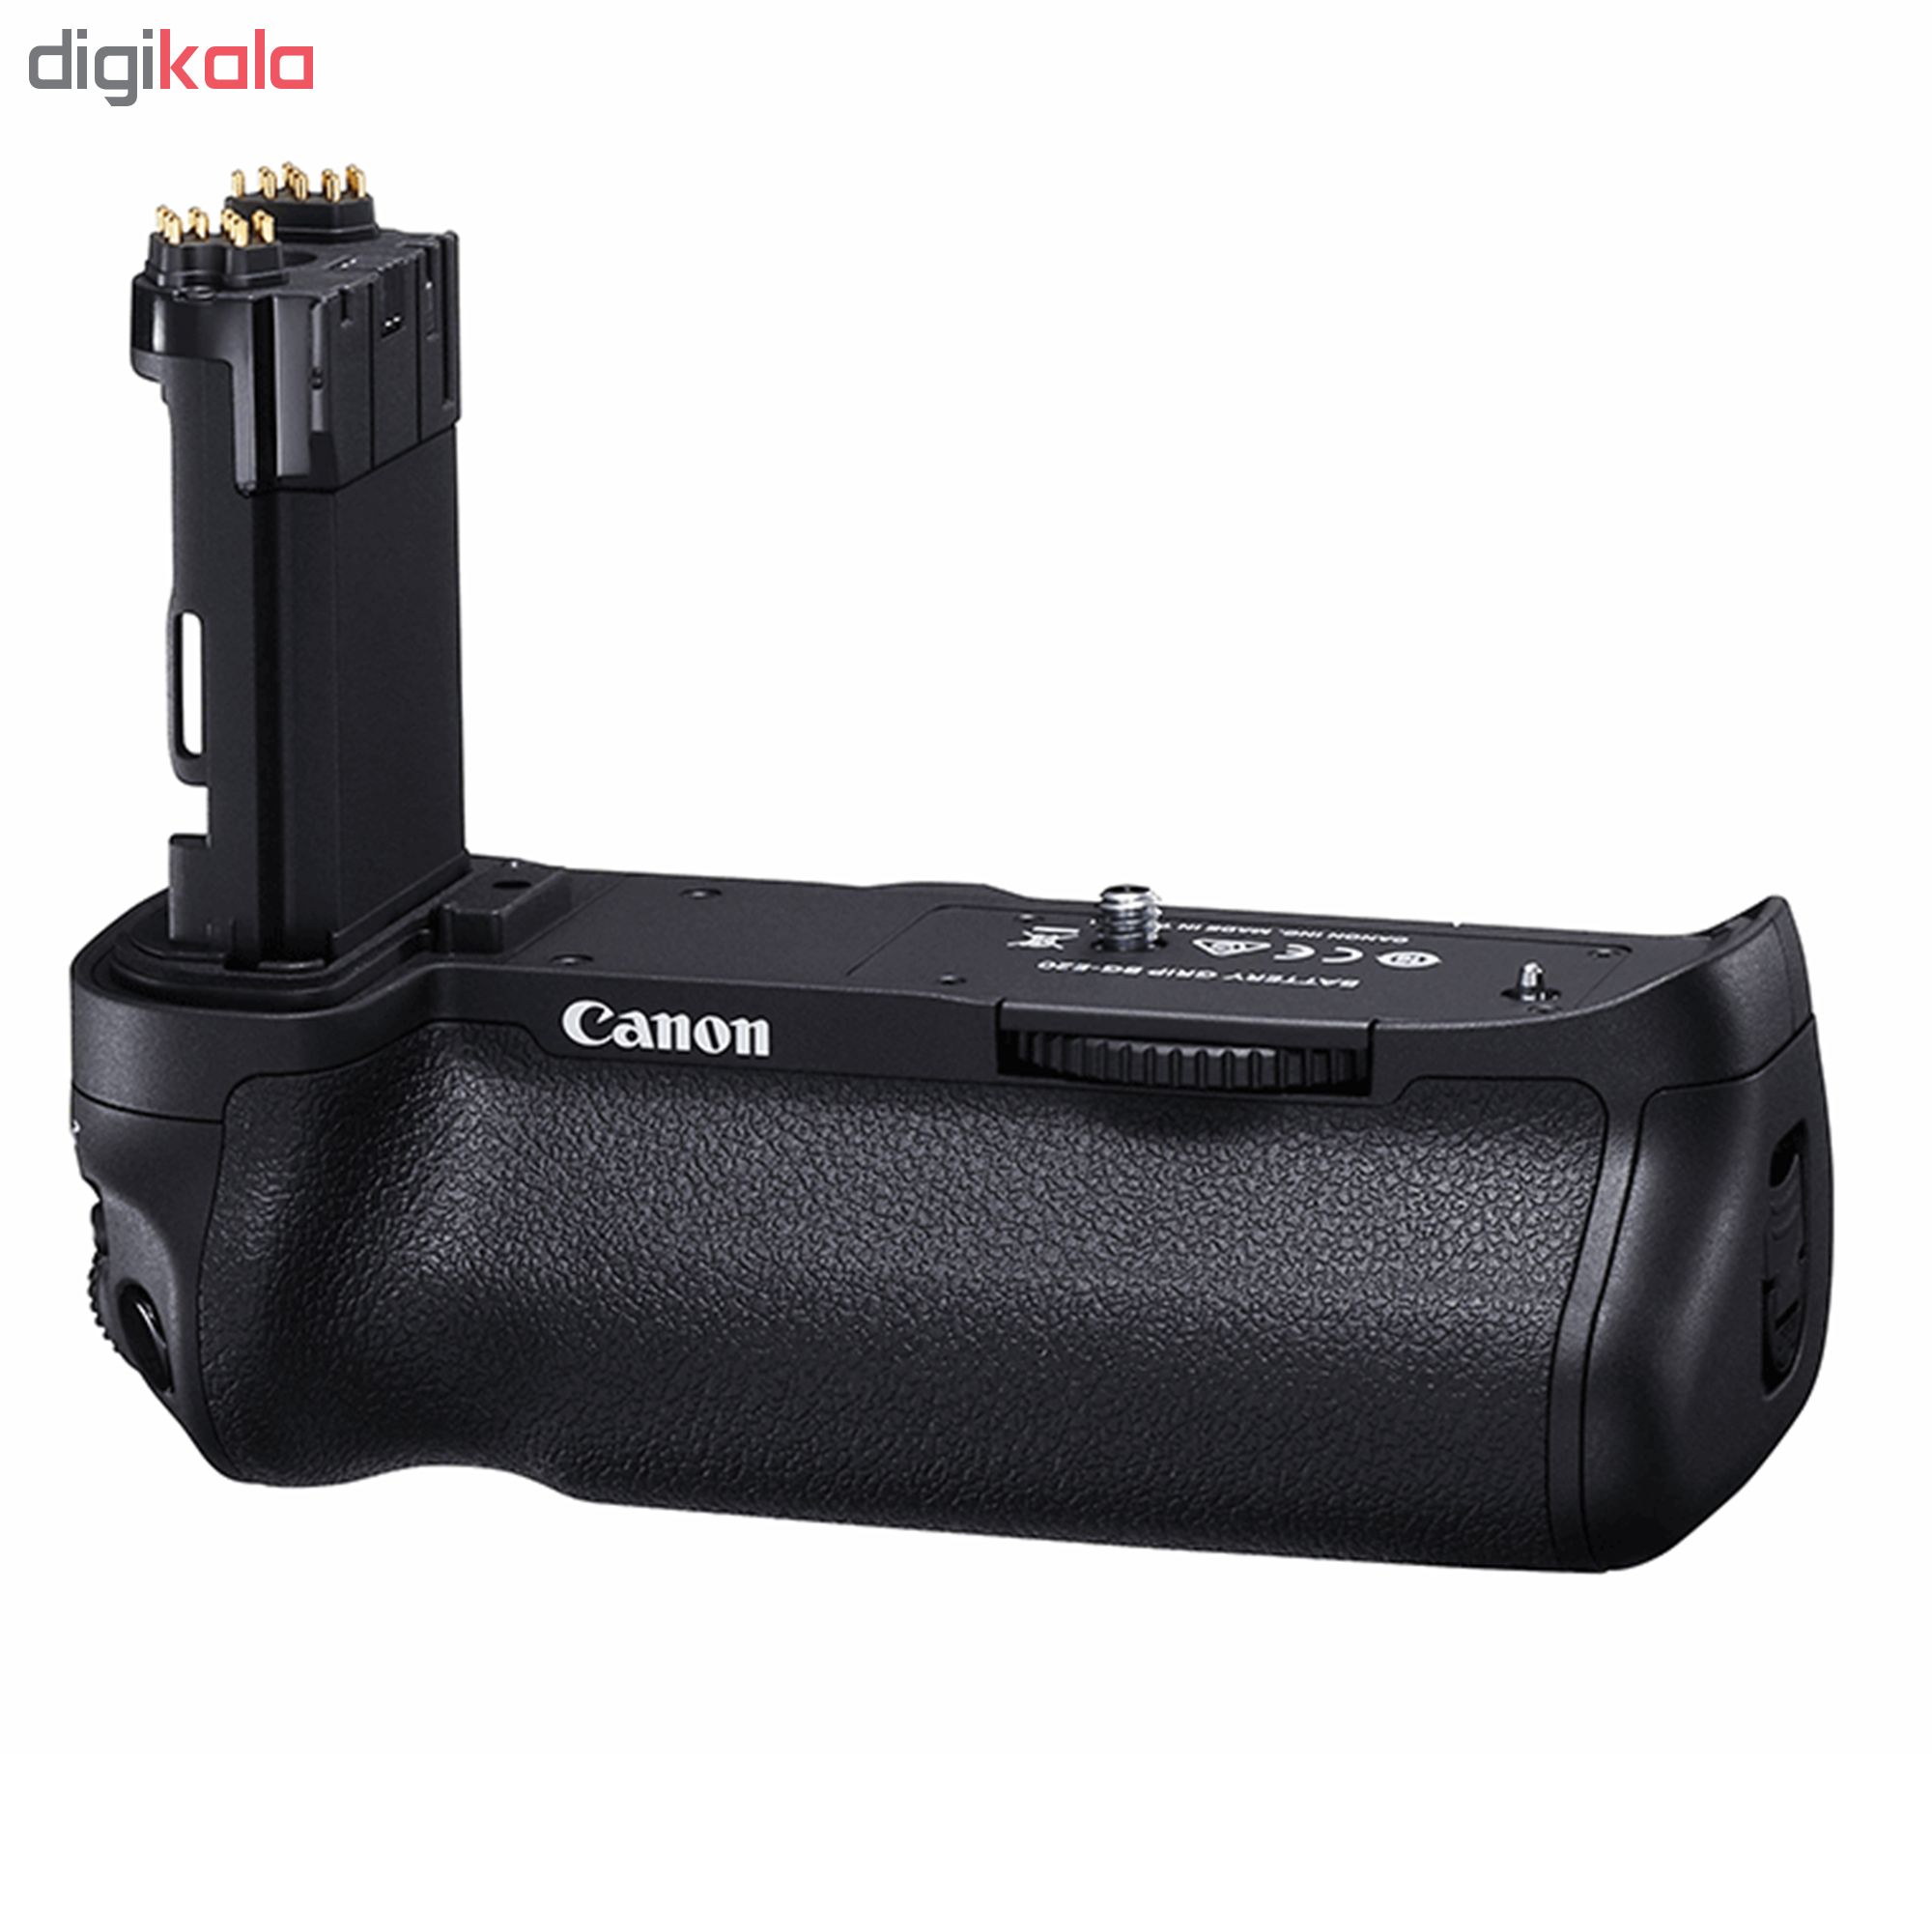 دوربین دیجیتال کانن مدل EOS 5D Mark IV به همراه گریپ اصلی باتری دوربین کانن مدل BG-E20